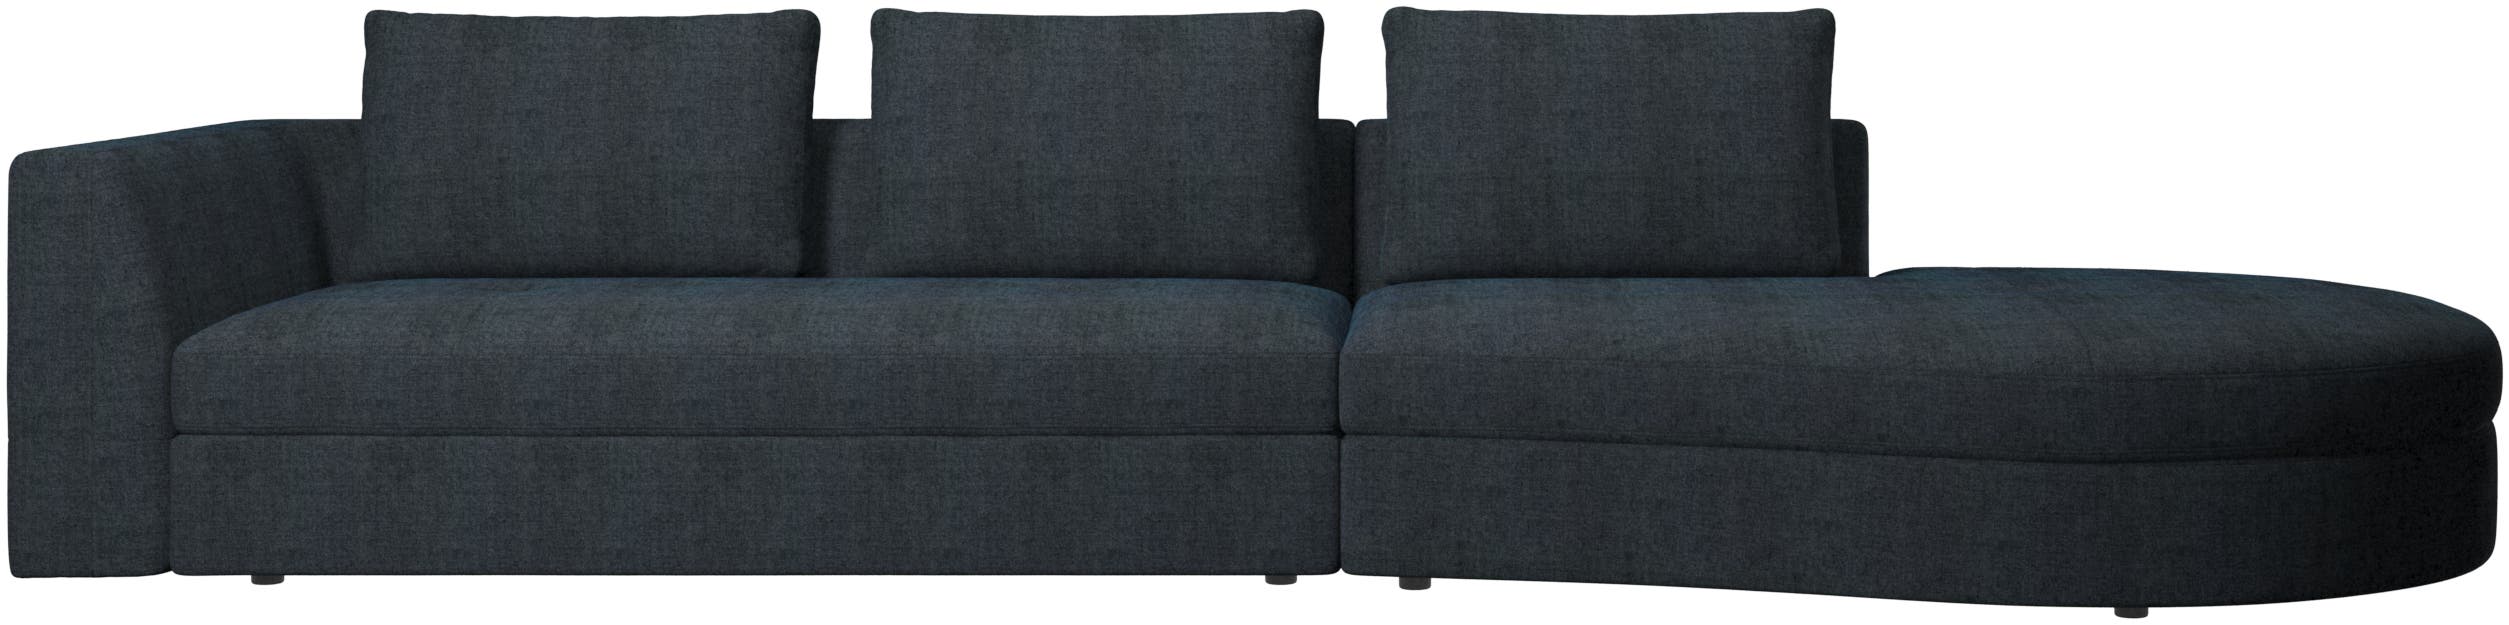 Bergamo sofa with round lounging unit,right